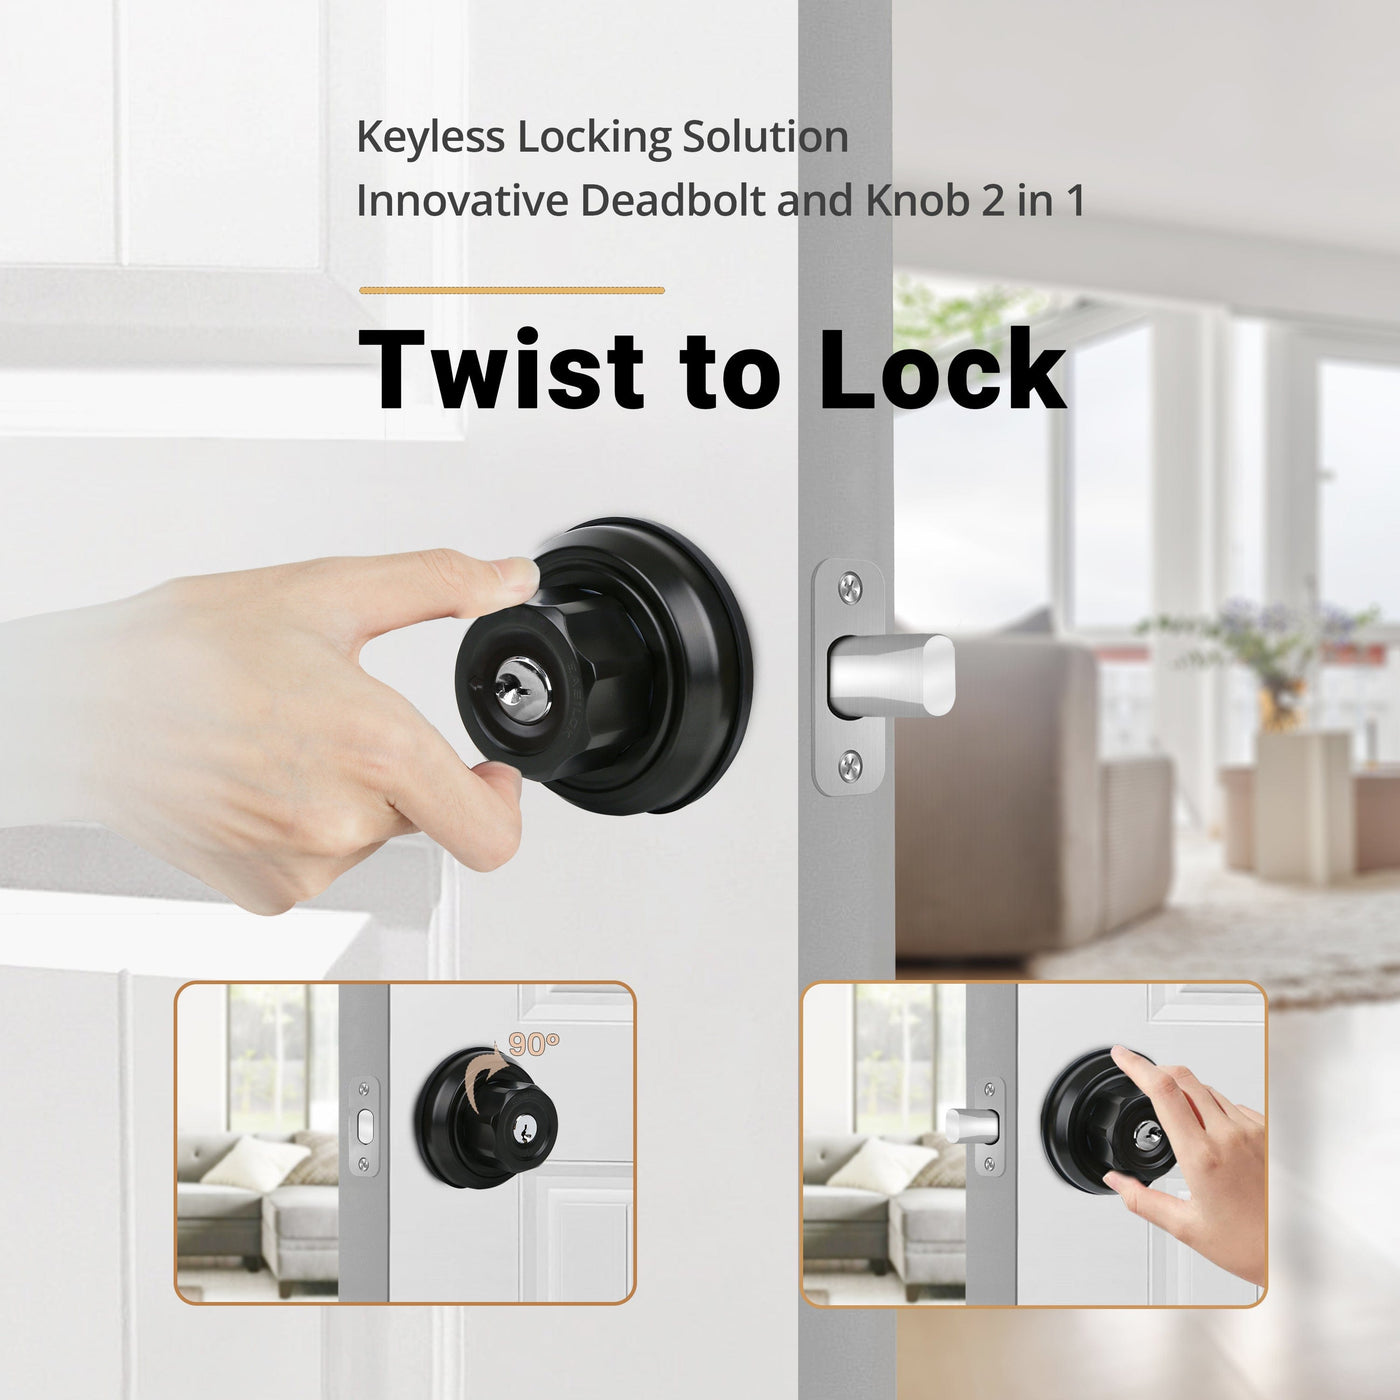 EASILOK E4 (Zinc Alloy)Deadbolt Lock, Black, Twist to Lock Keyless with Night Latch & Anti-Mislock Button, Security Child Safety Lock